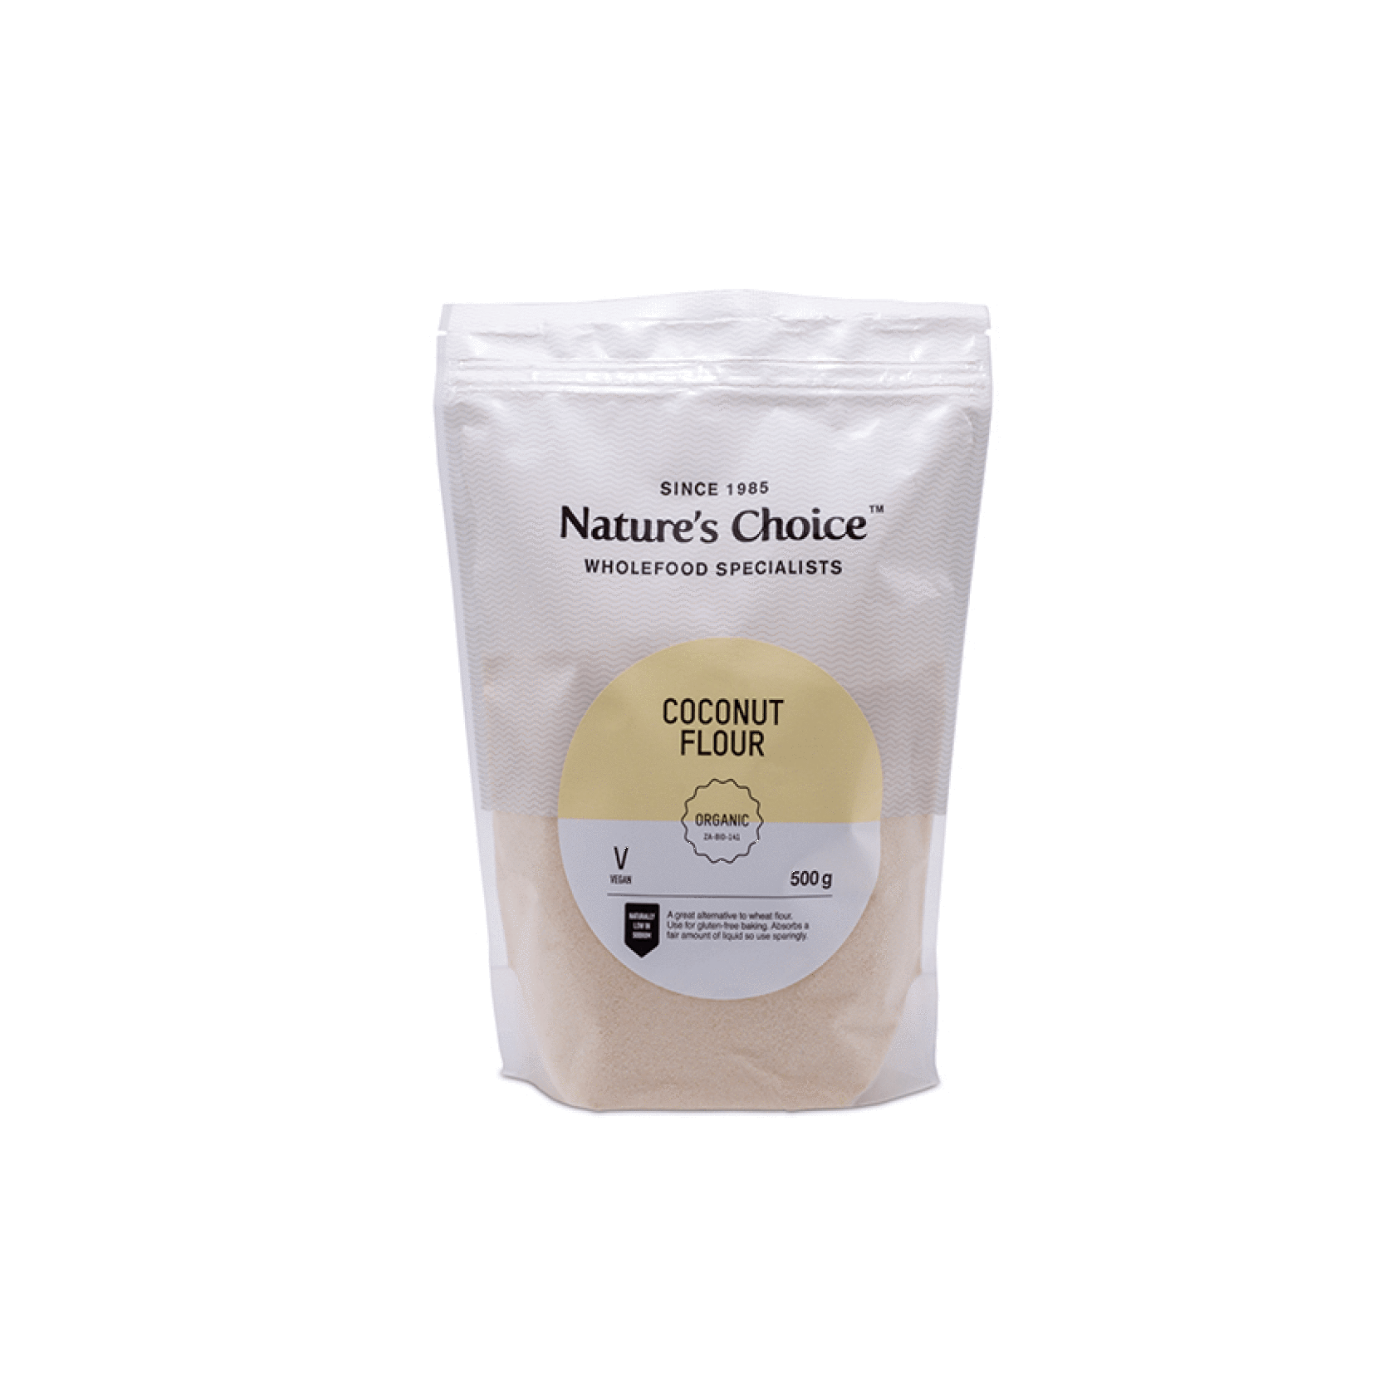 Nature's Choice Coconut Flour, 500g